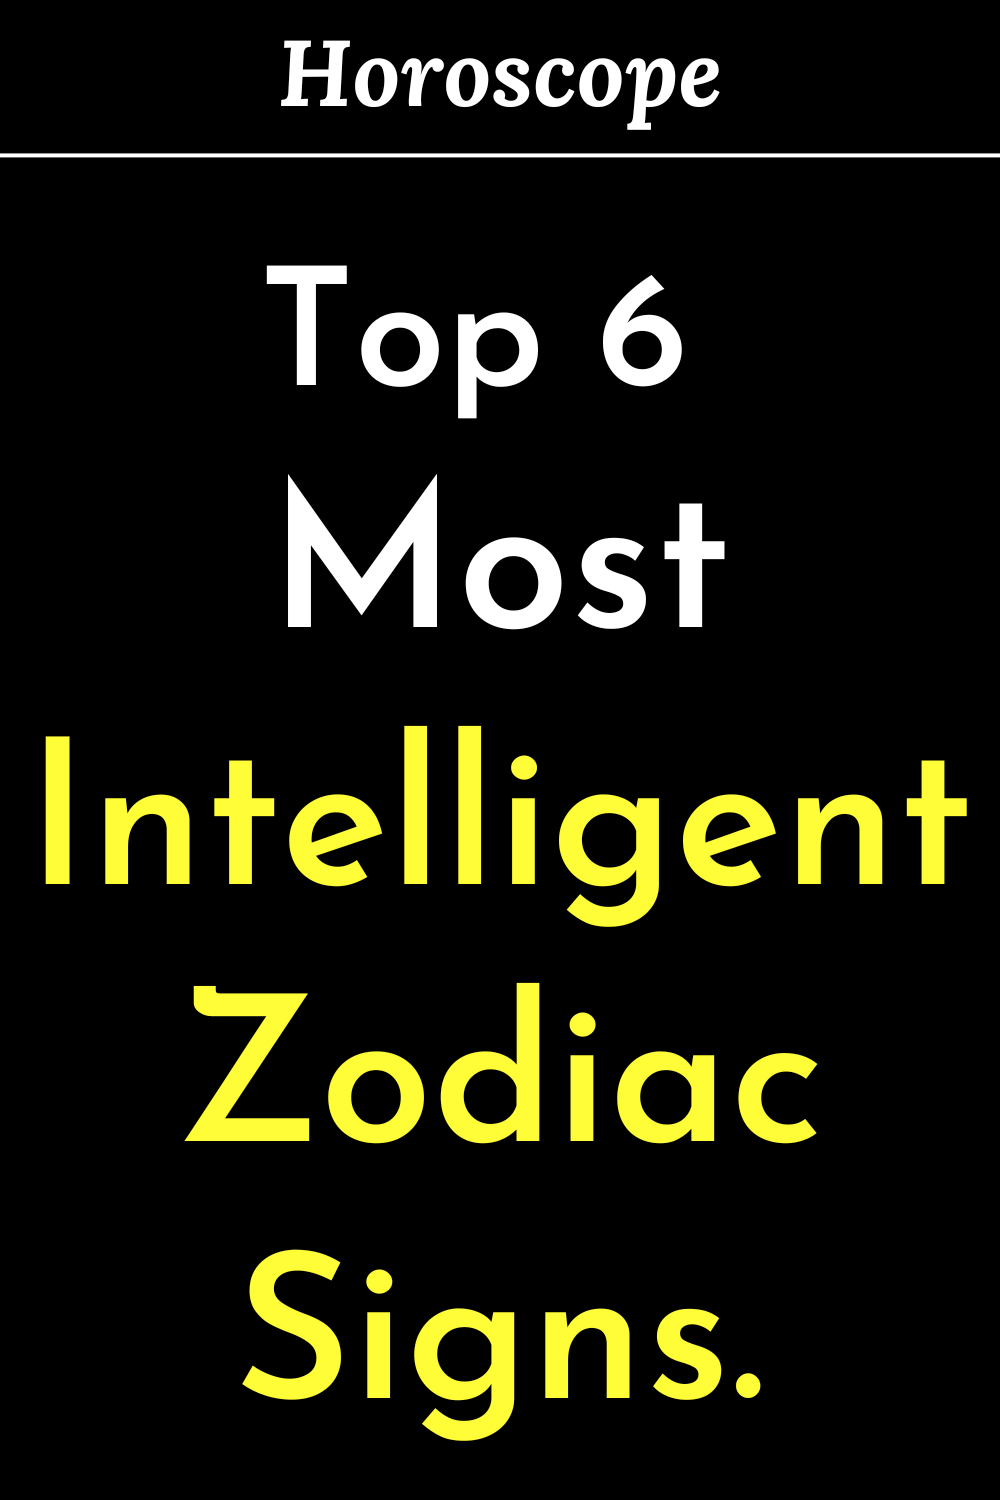 Top 6 Most Intelligent Zodiac Signs.